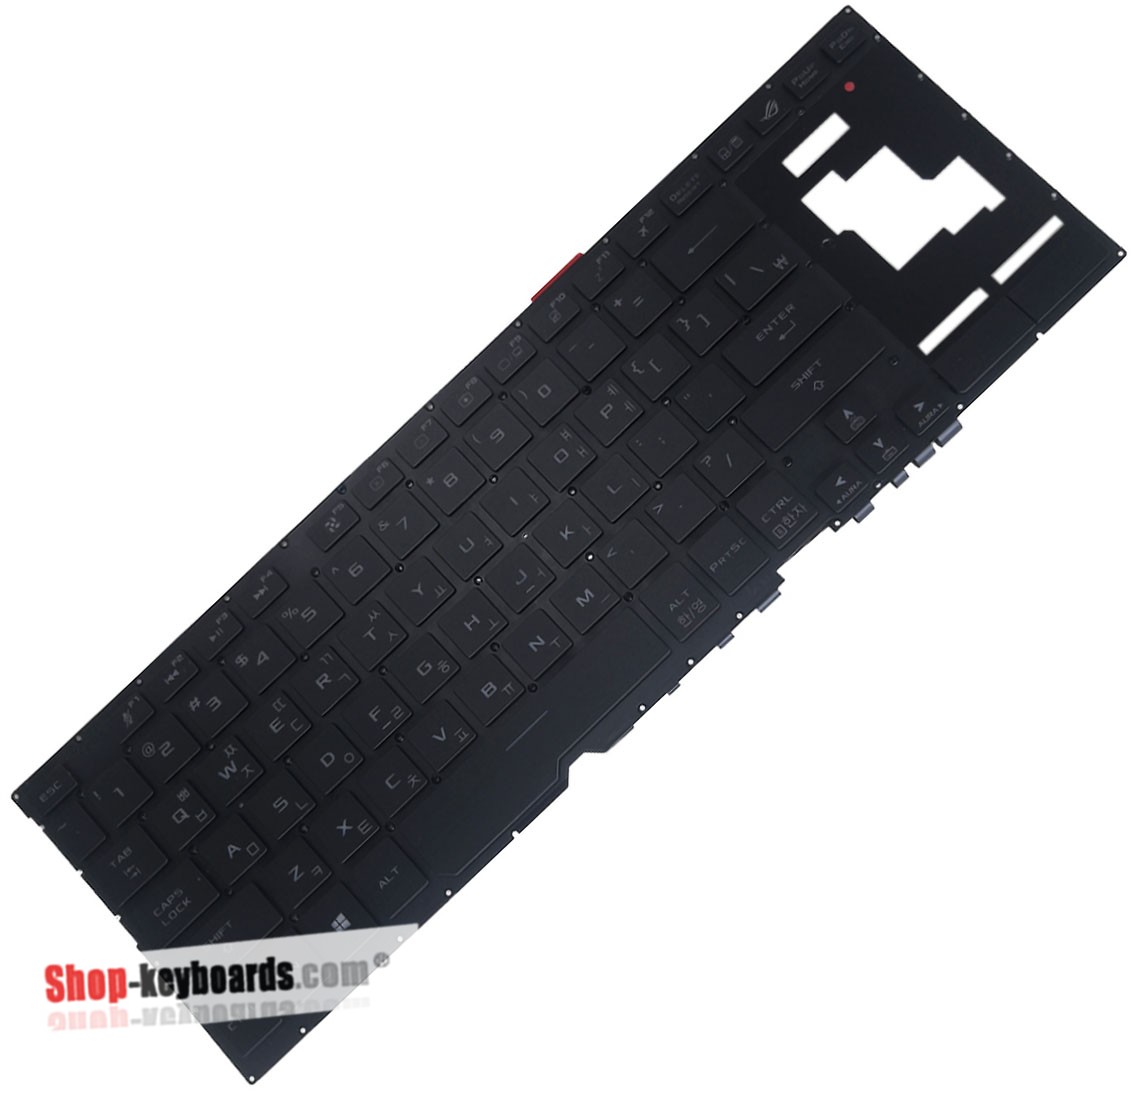 Asus 0KNR0-661EUS00 Keyboard replacement